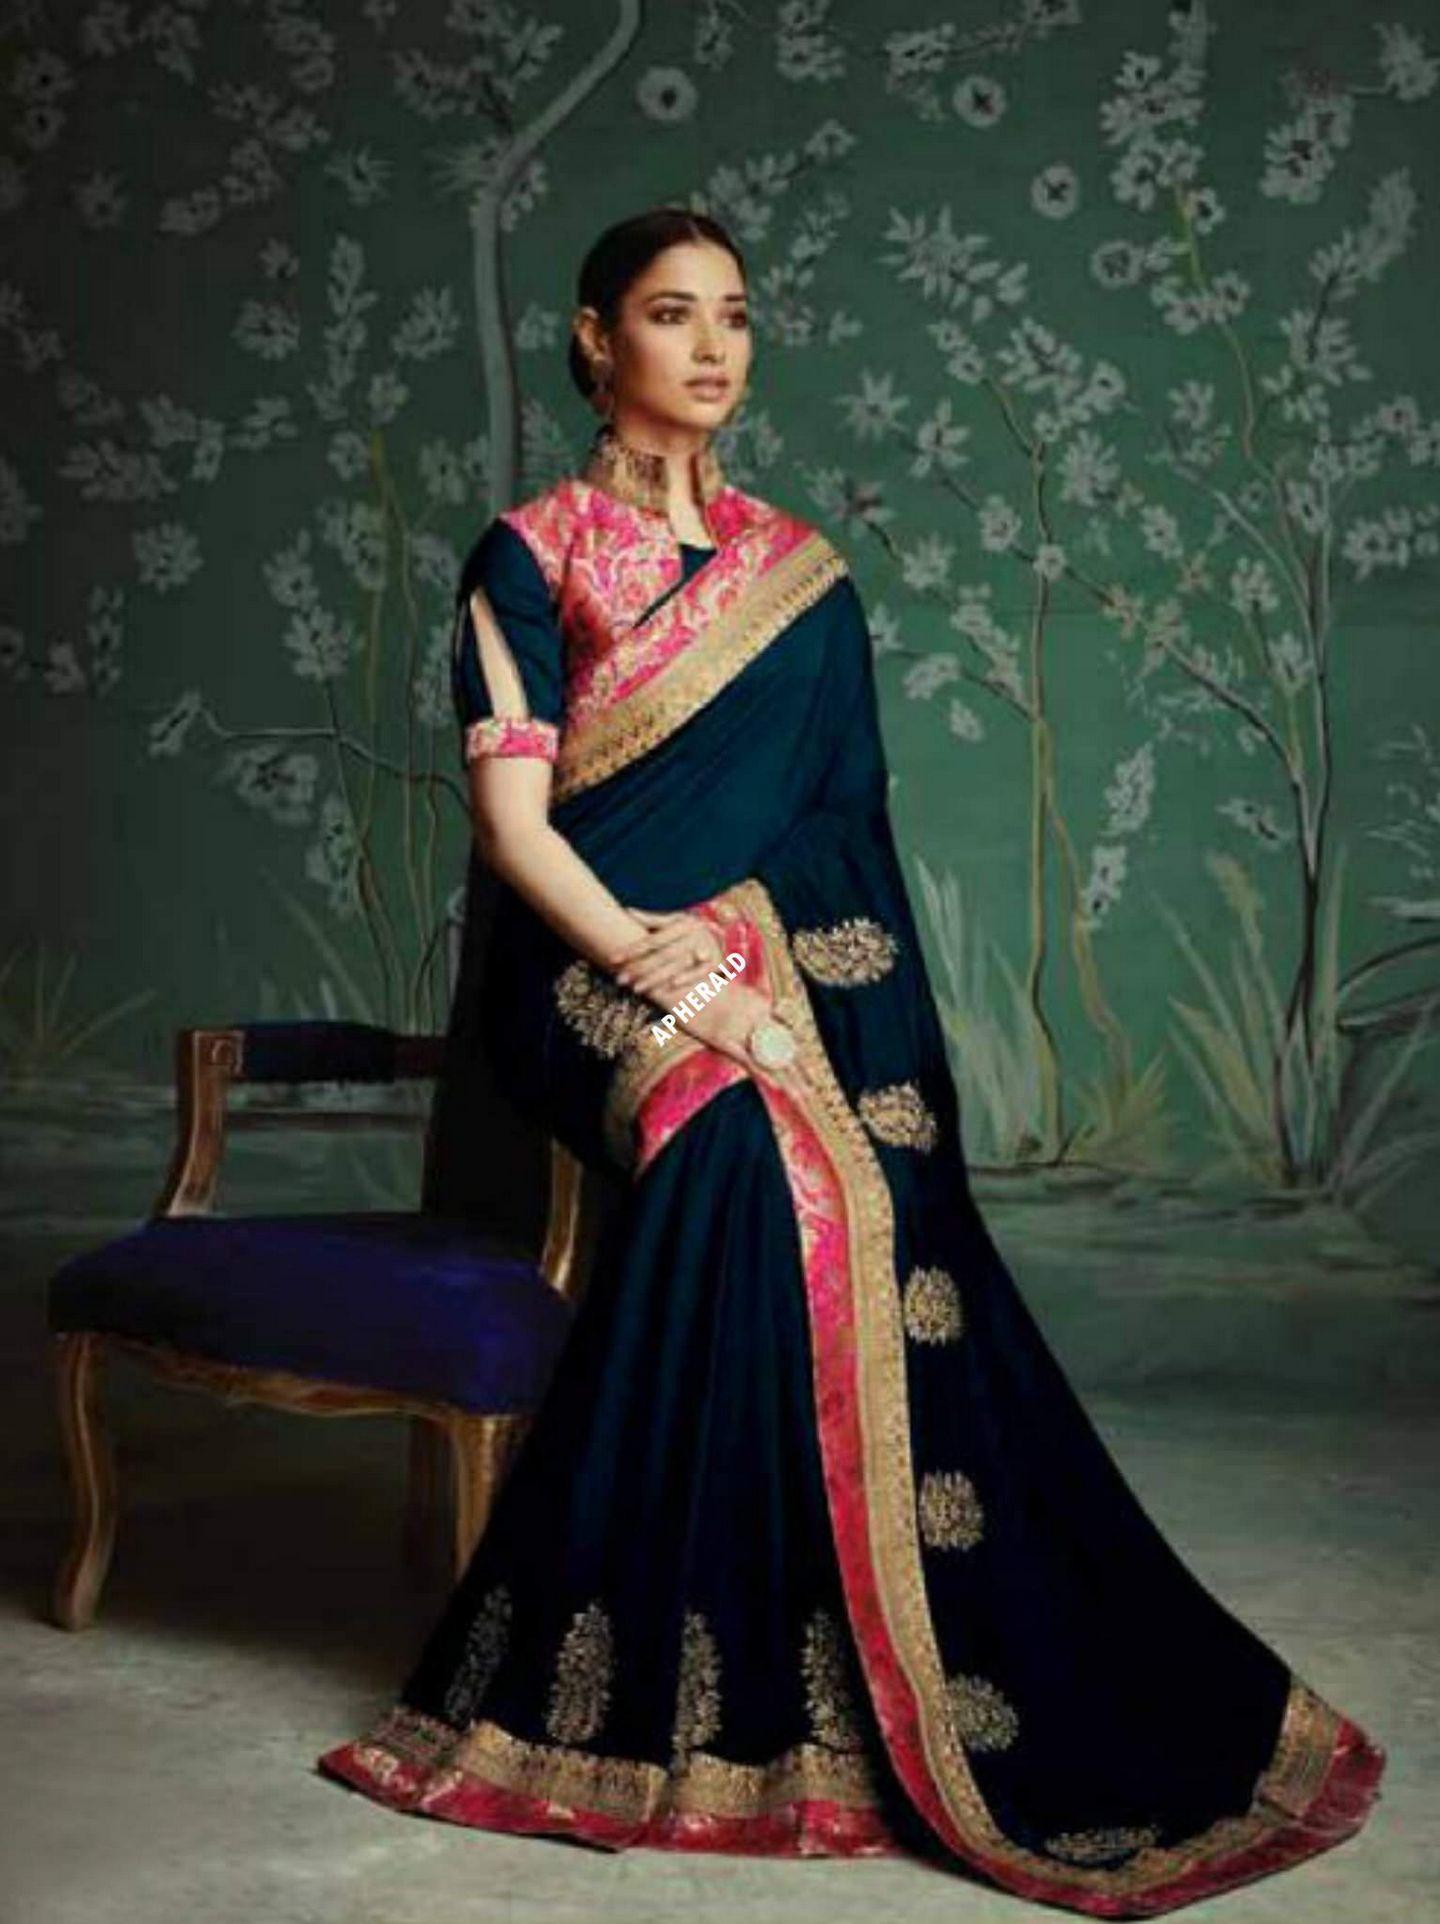 Tamanna's latest saree photoshoot for a Textile showroom